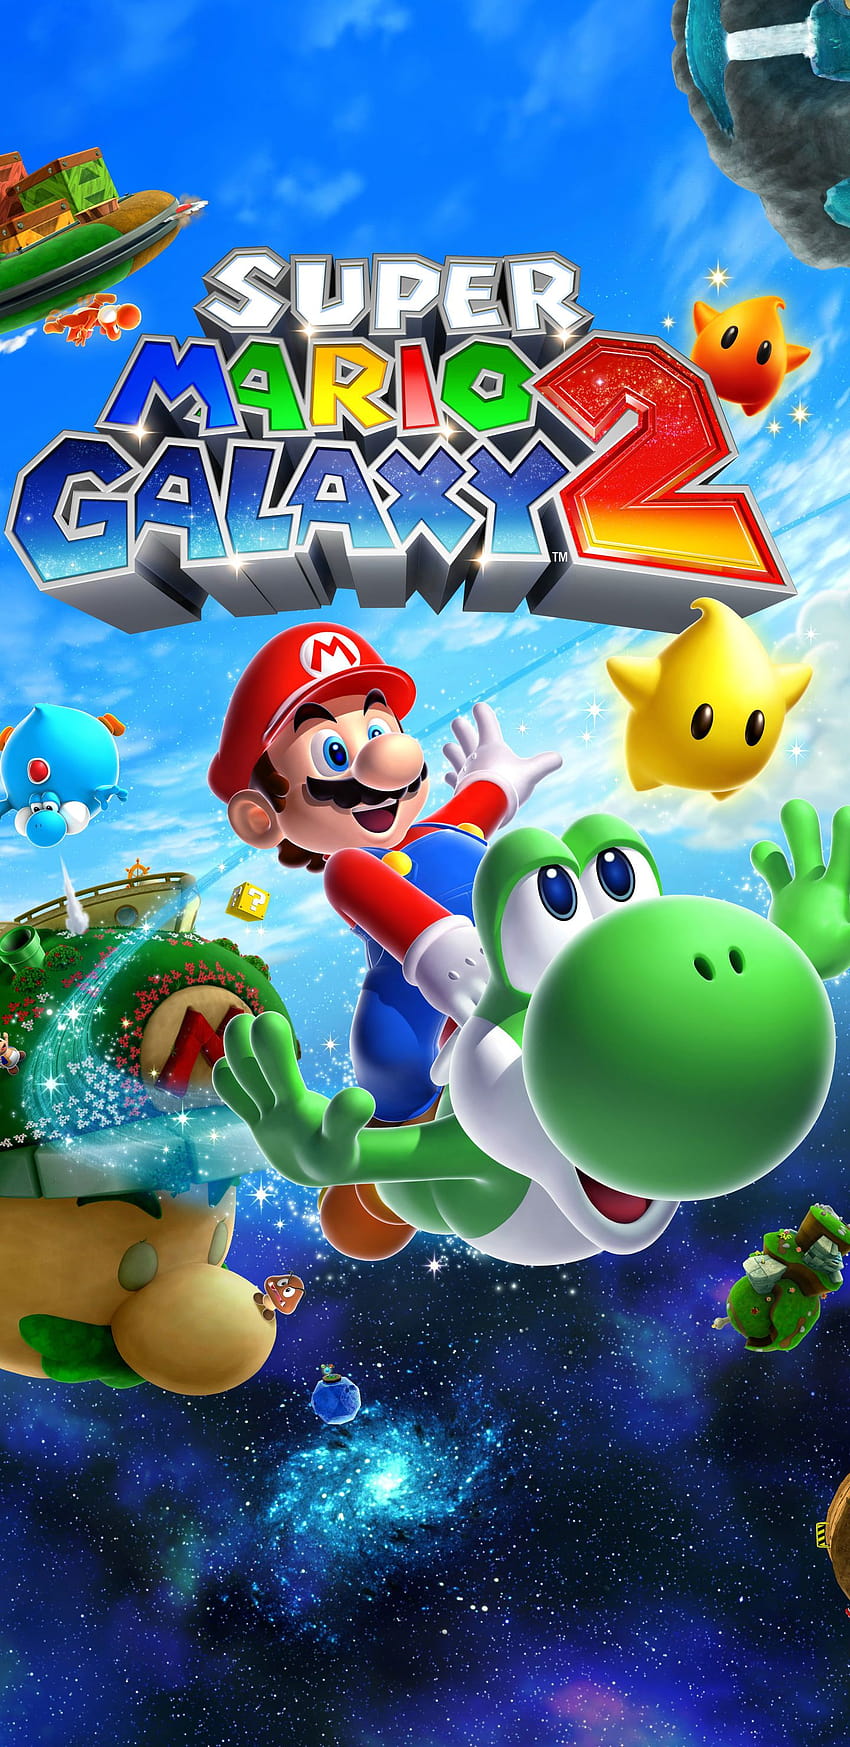 1440x2960 Super Mario Galaxy 2 Samsung Galaxy Note 9,8, S9,S8,S, mario galaxy phone HD phone wallpaper